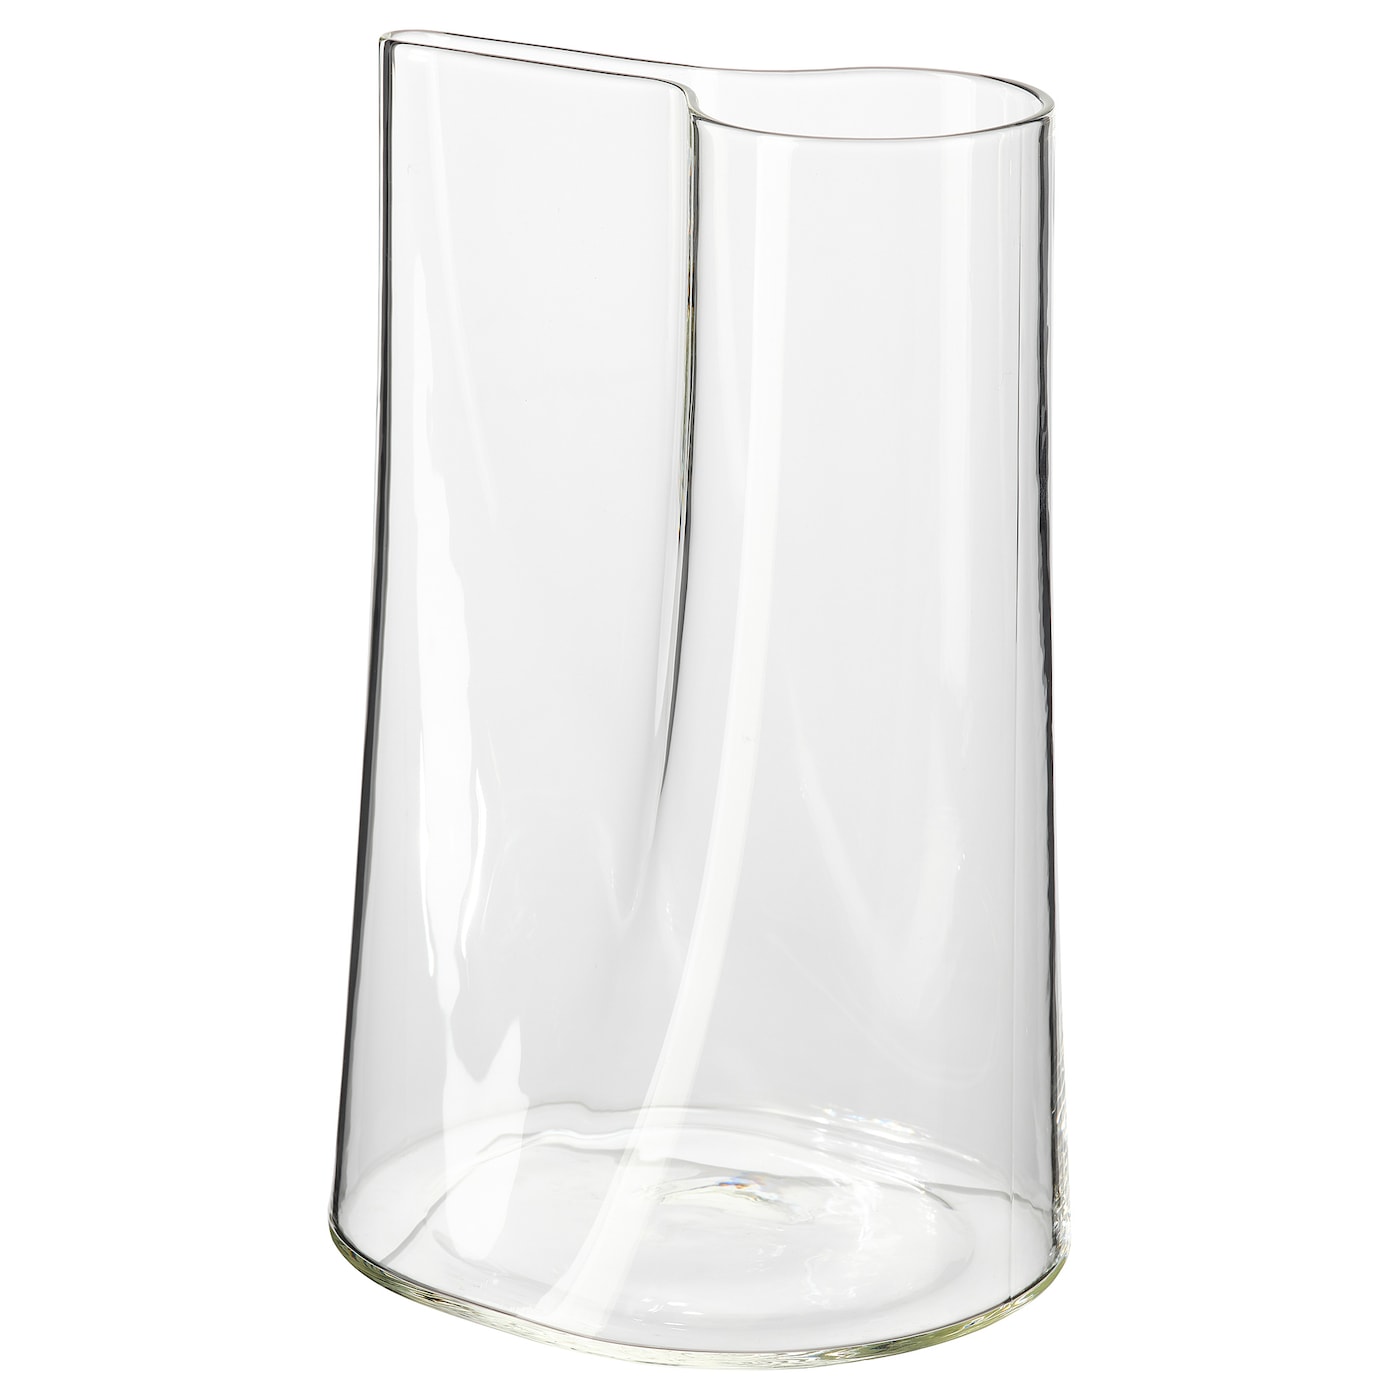 CHILIFRUKT ЧИЛИФРУКТ Ваза/лейка, прозрачное стекло, 21 см IKEA ваза для цветов свадебная